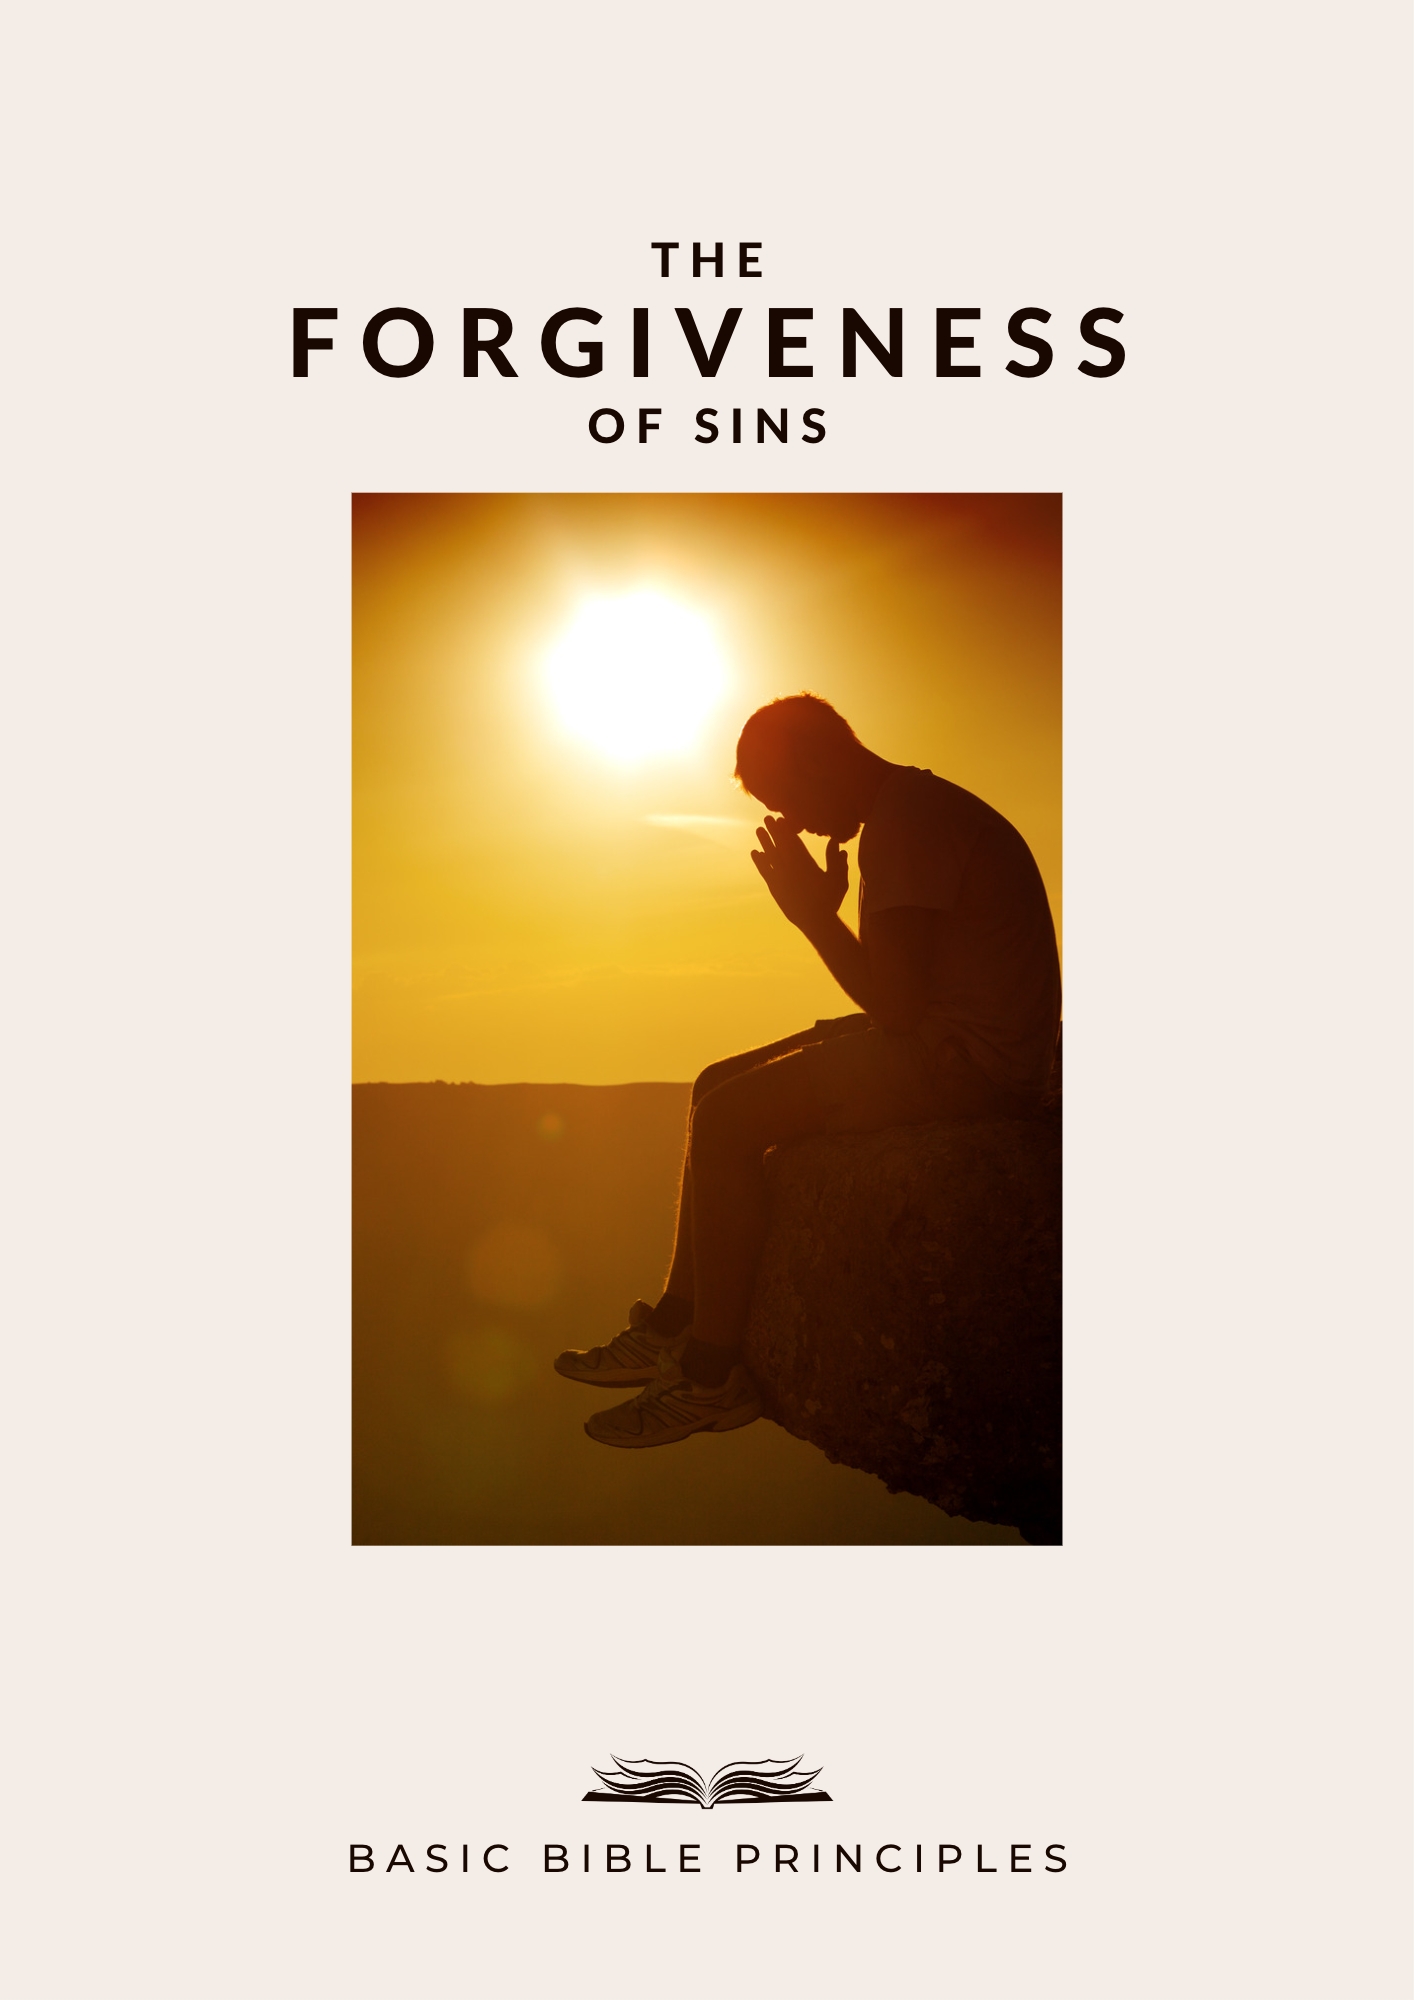 Basic Bible Principles: THE FORGIVENESS OF SINS